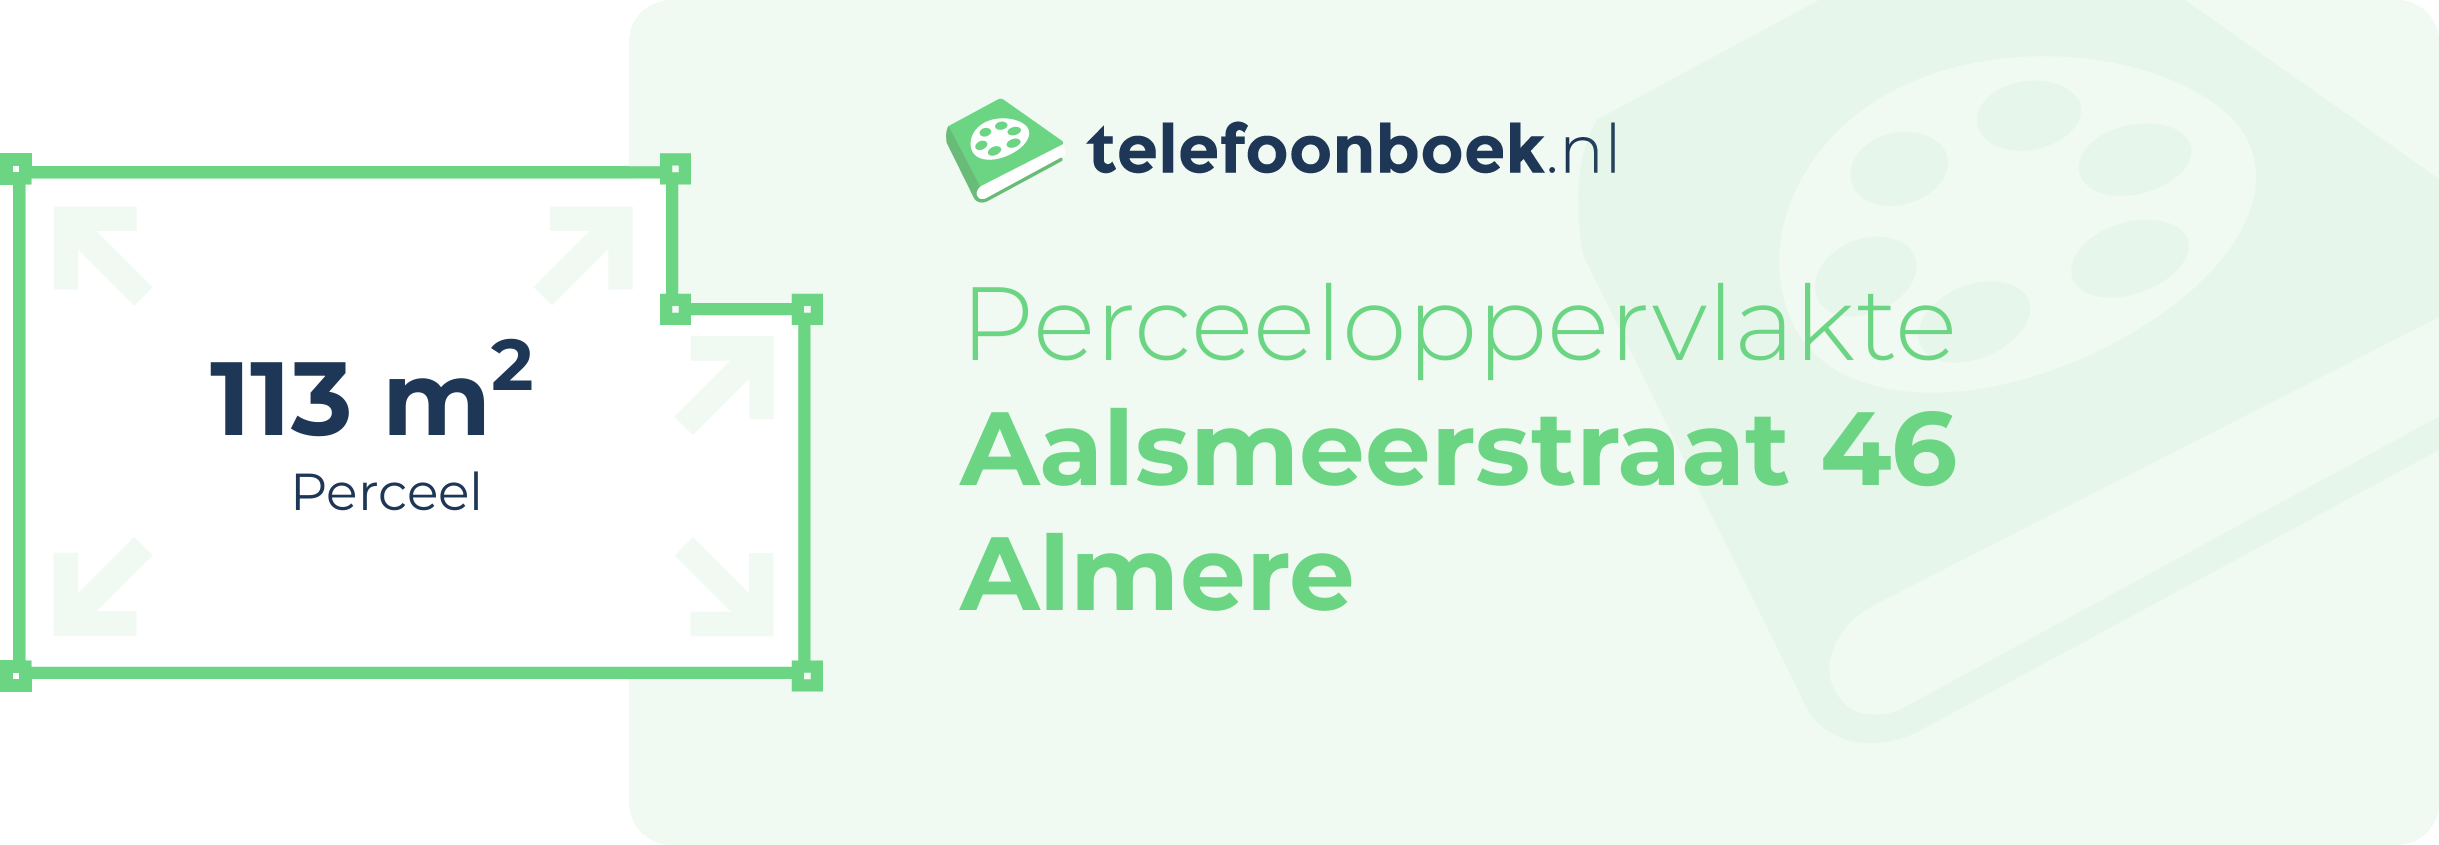 Perceeloppervlakte Aalsmeerstraat 46 Almere